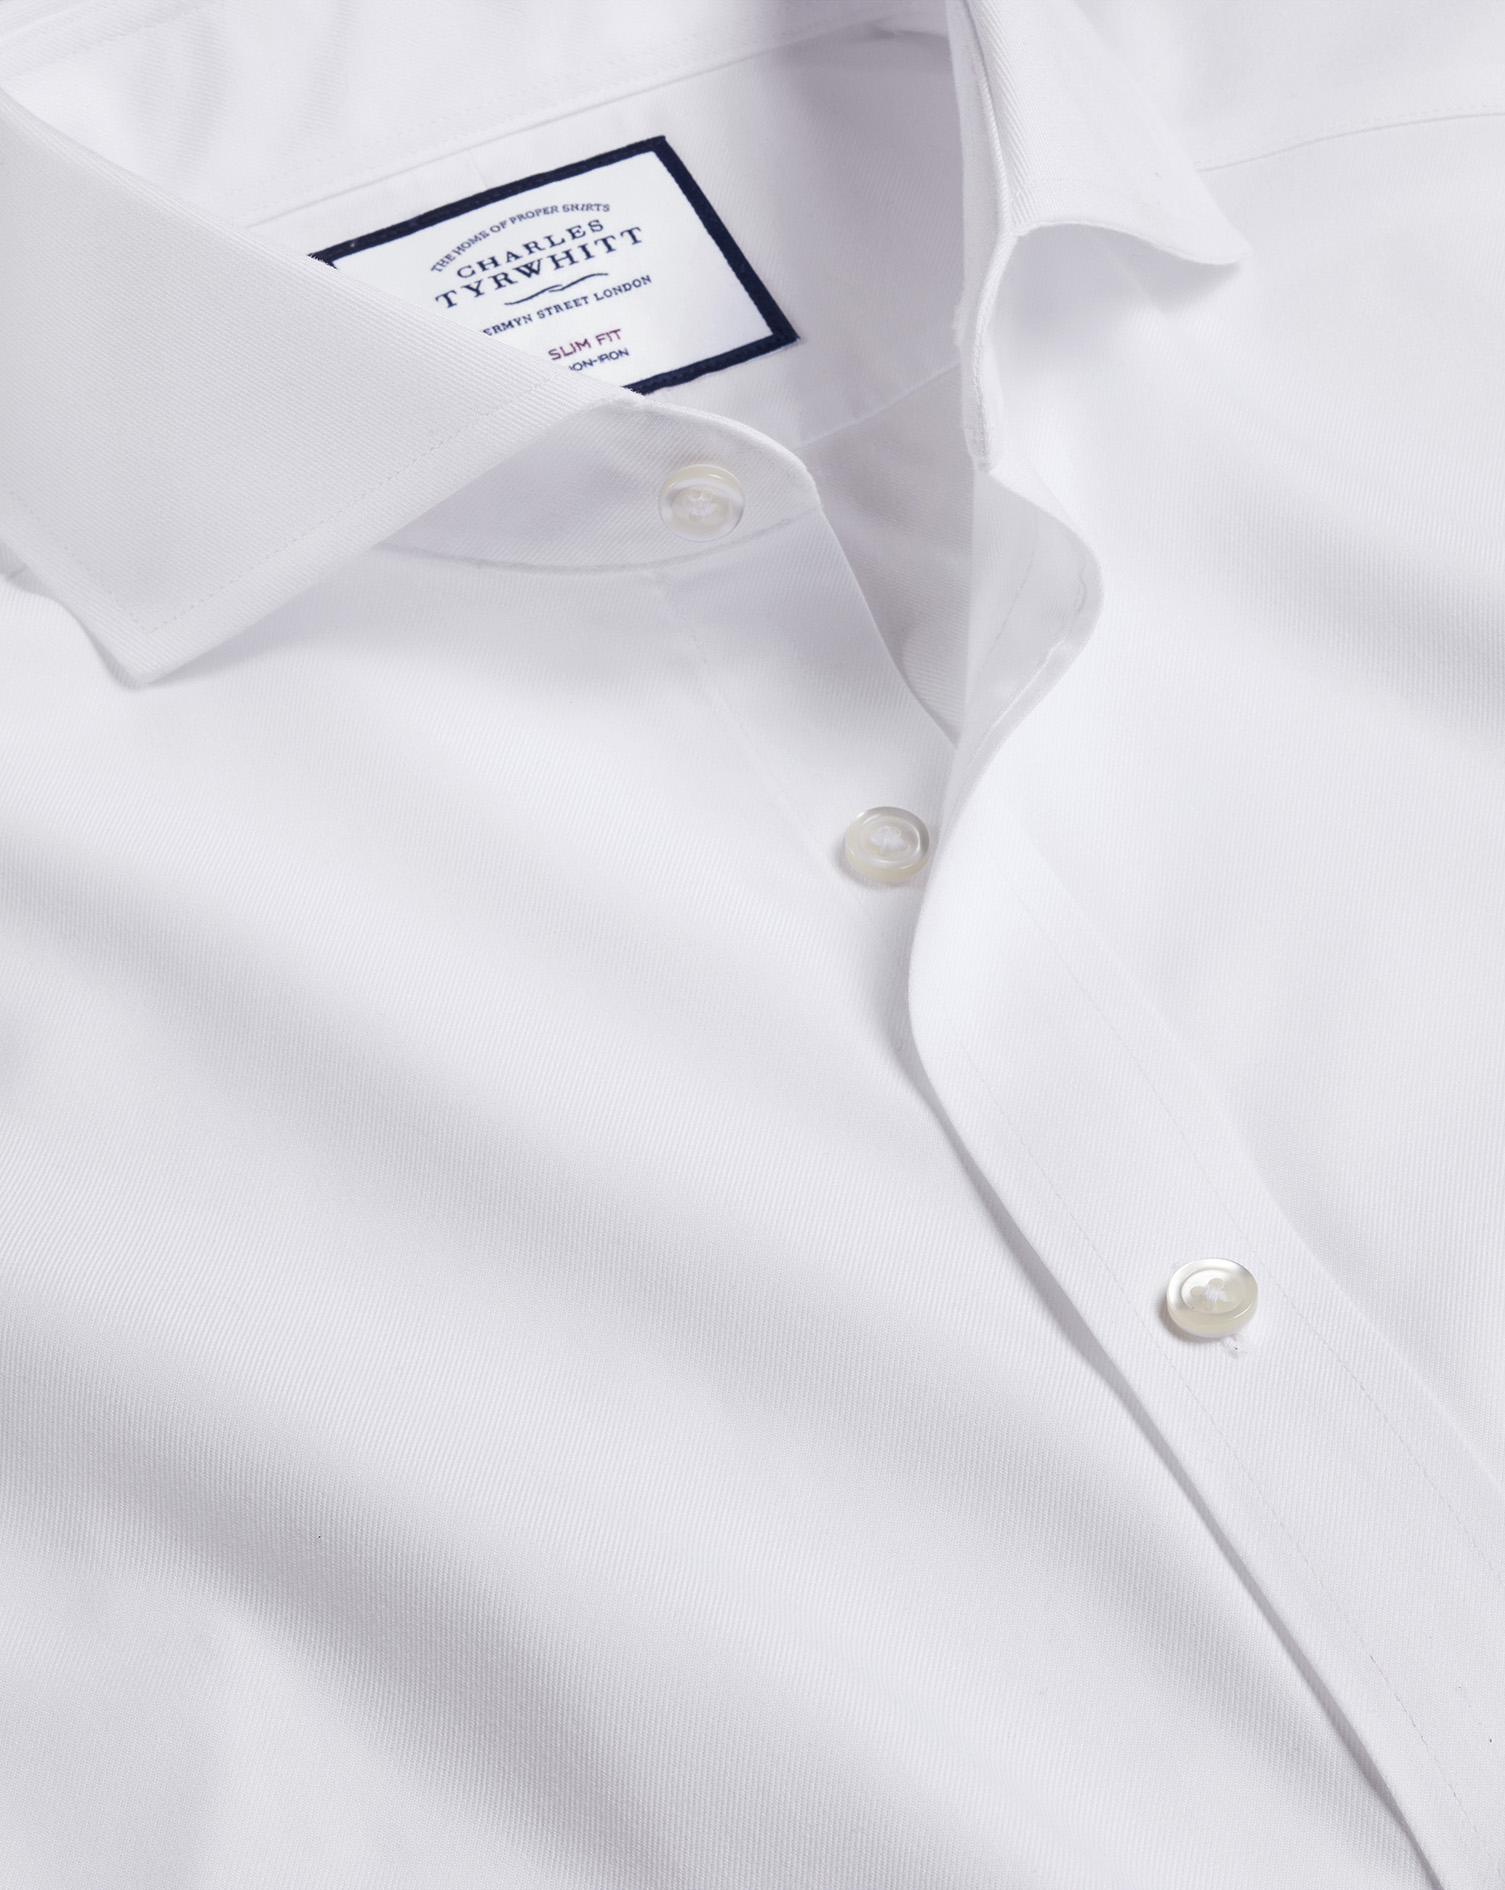 Men's Charles Tyrwhitt Extreme Cutaway Collar Non-Iron Twill Dress Shirt - White Single Cuff Size Me